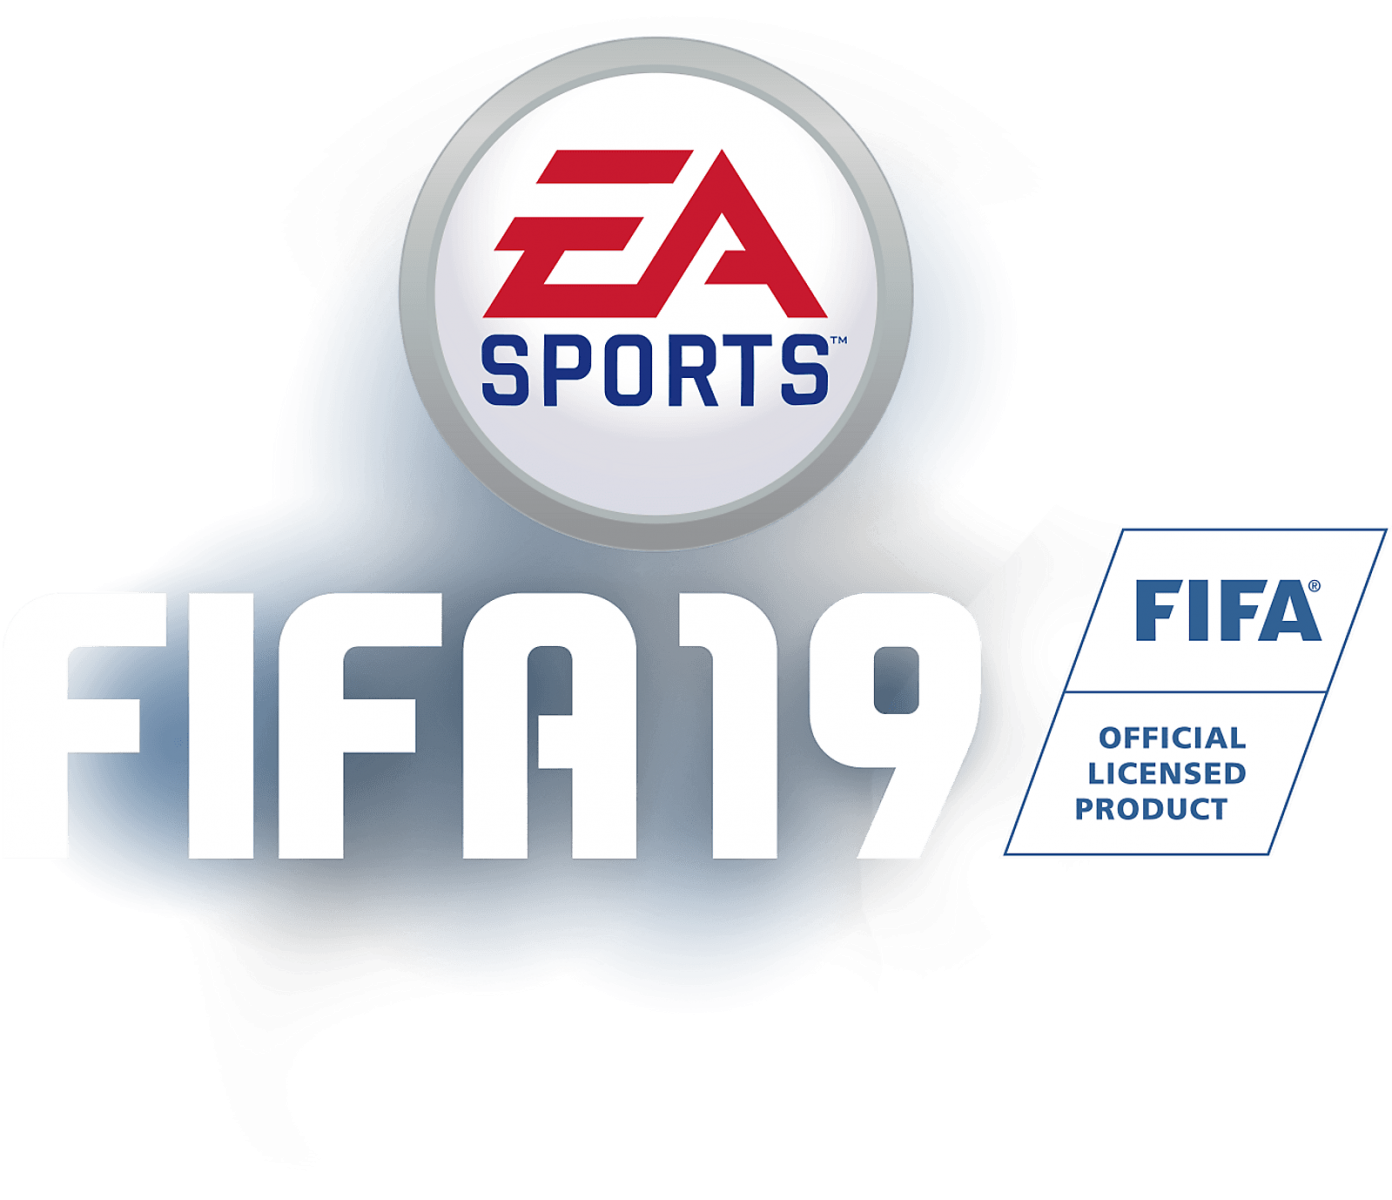 Fifa ids. ФИФА логотип. FIFA 19 логотип. Еа Спортс ФИФА. Значок EA Sports.